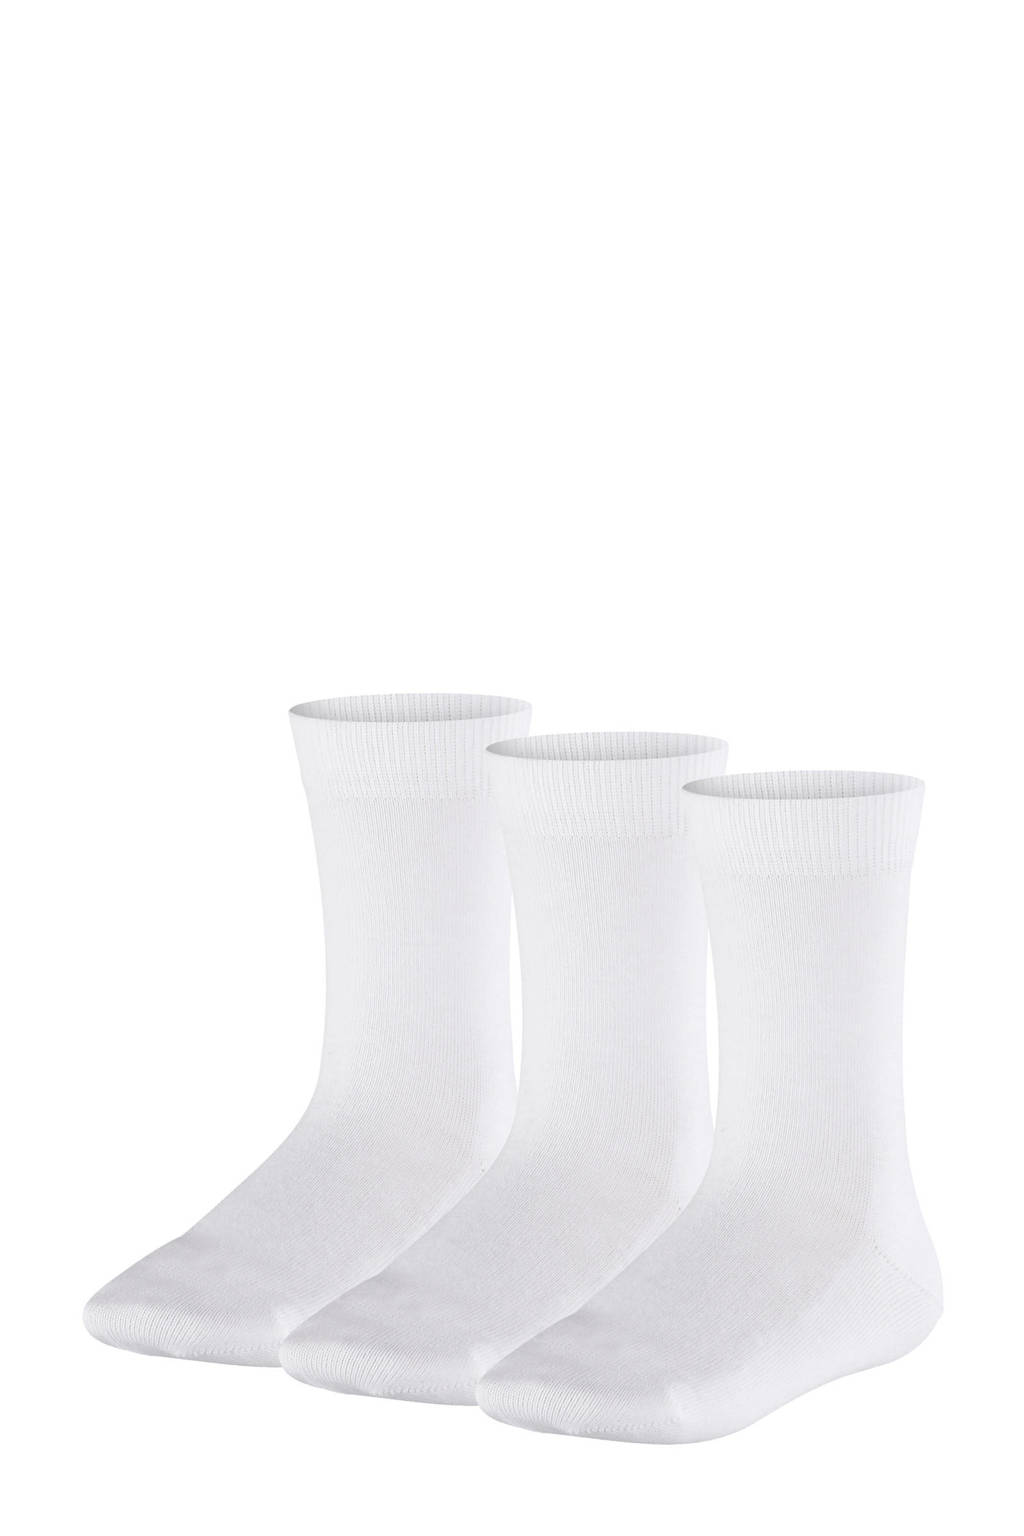 FALKE Family sokken - set van 3 wit, Wit